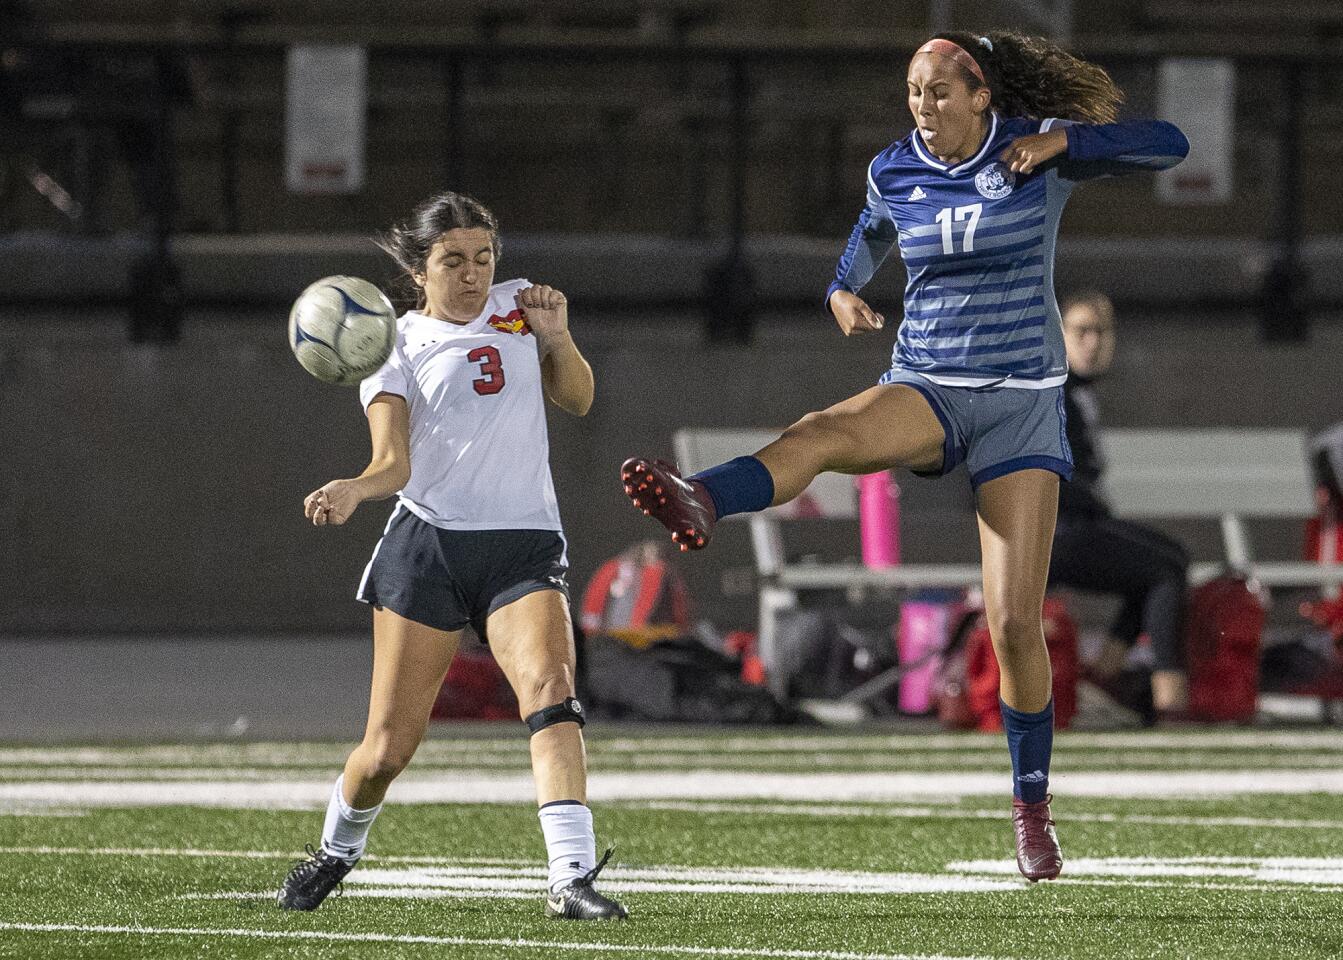 Photo Gallery: Newport Harbor vs. Mission Viejo in girls’ soccer